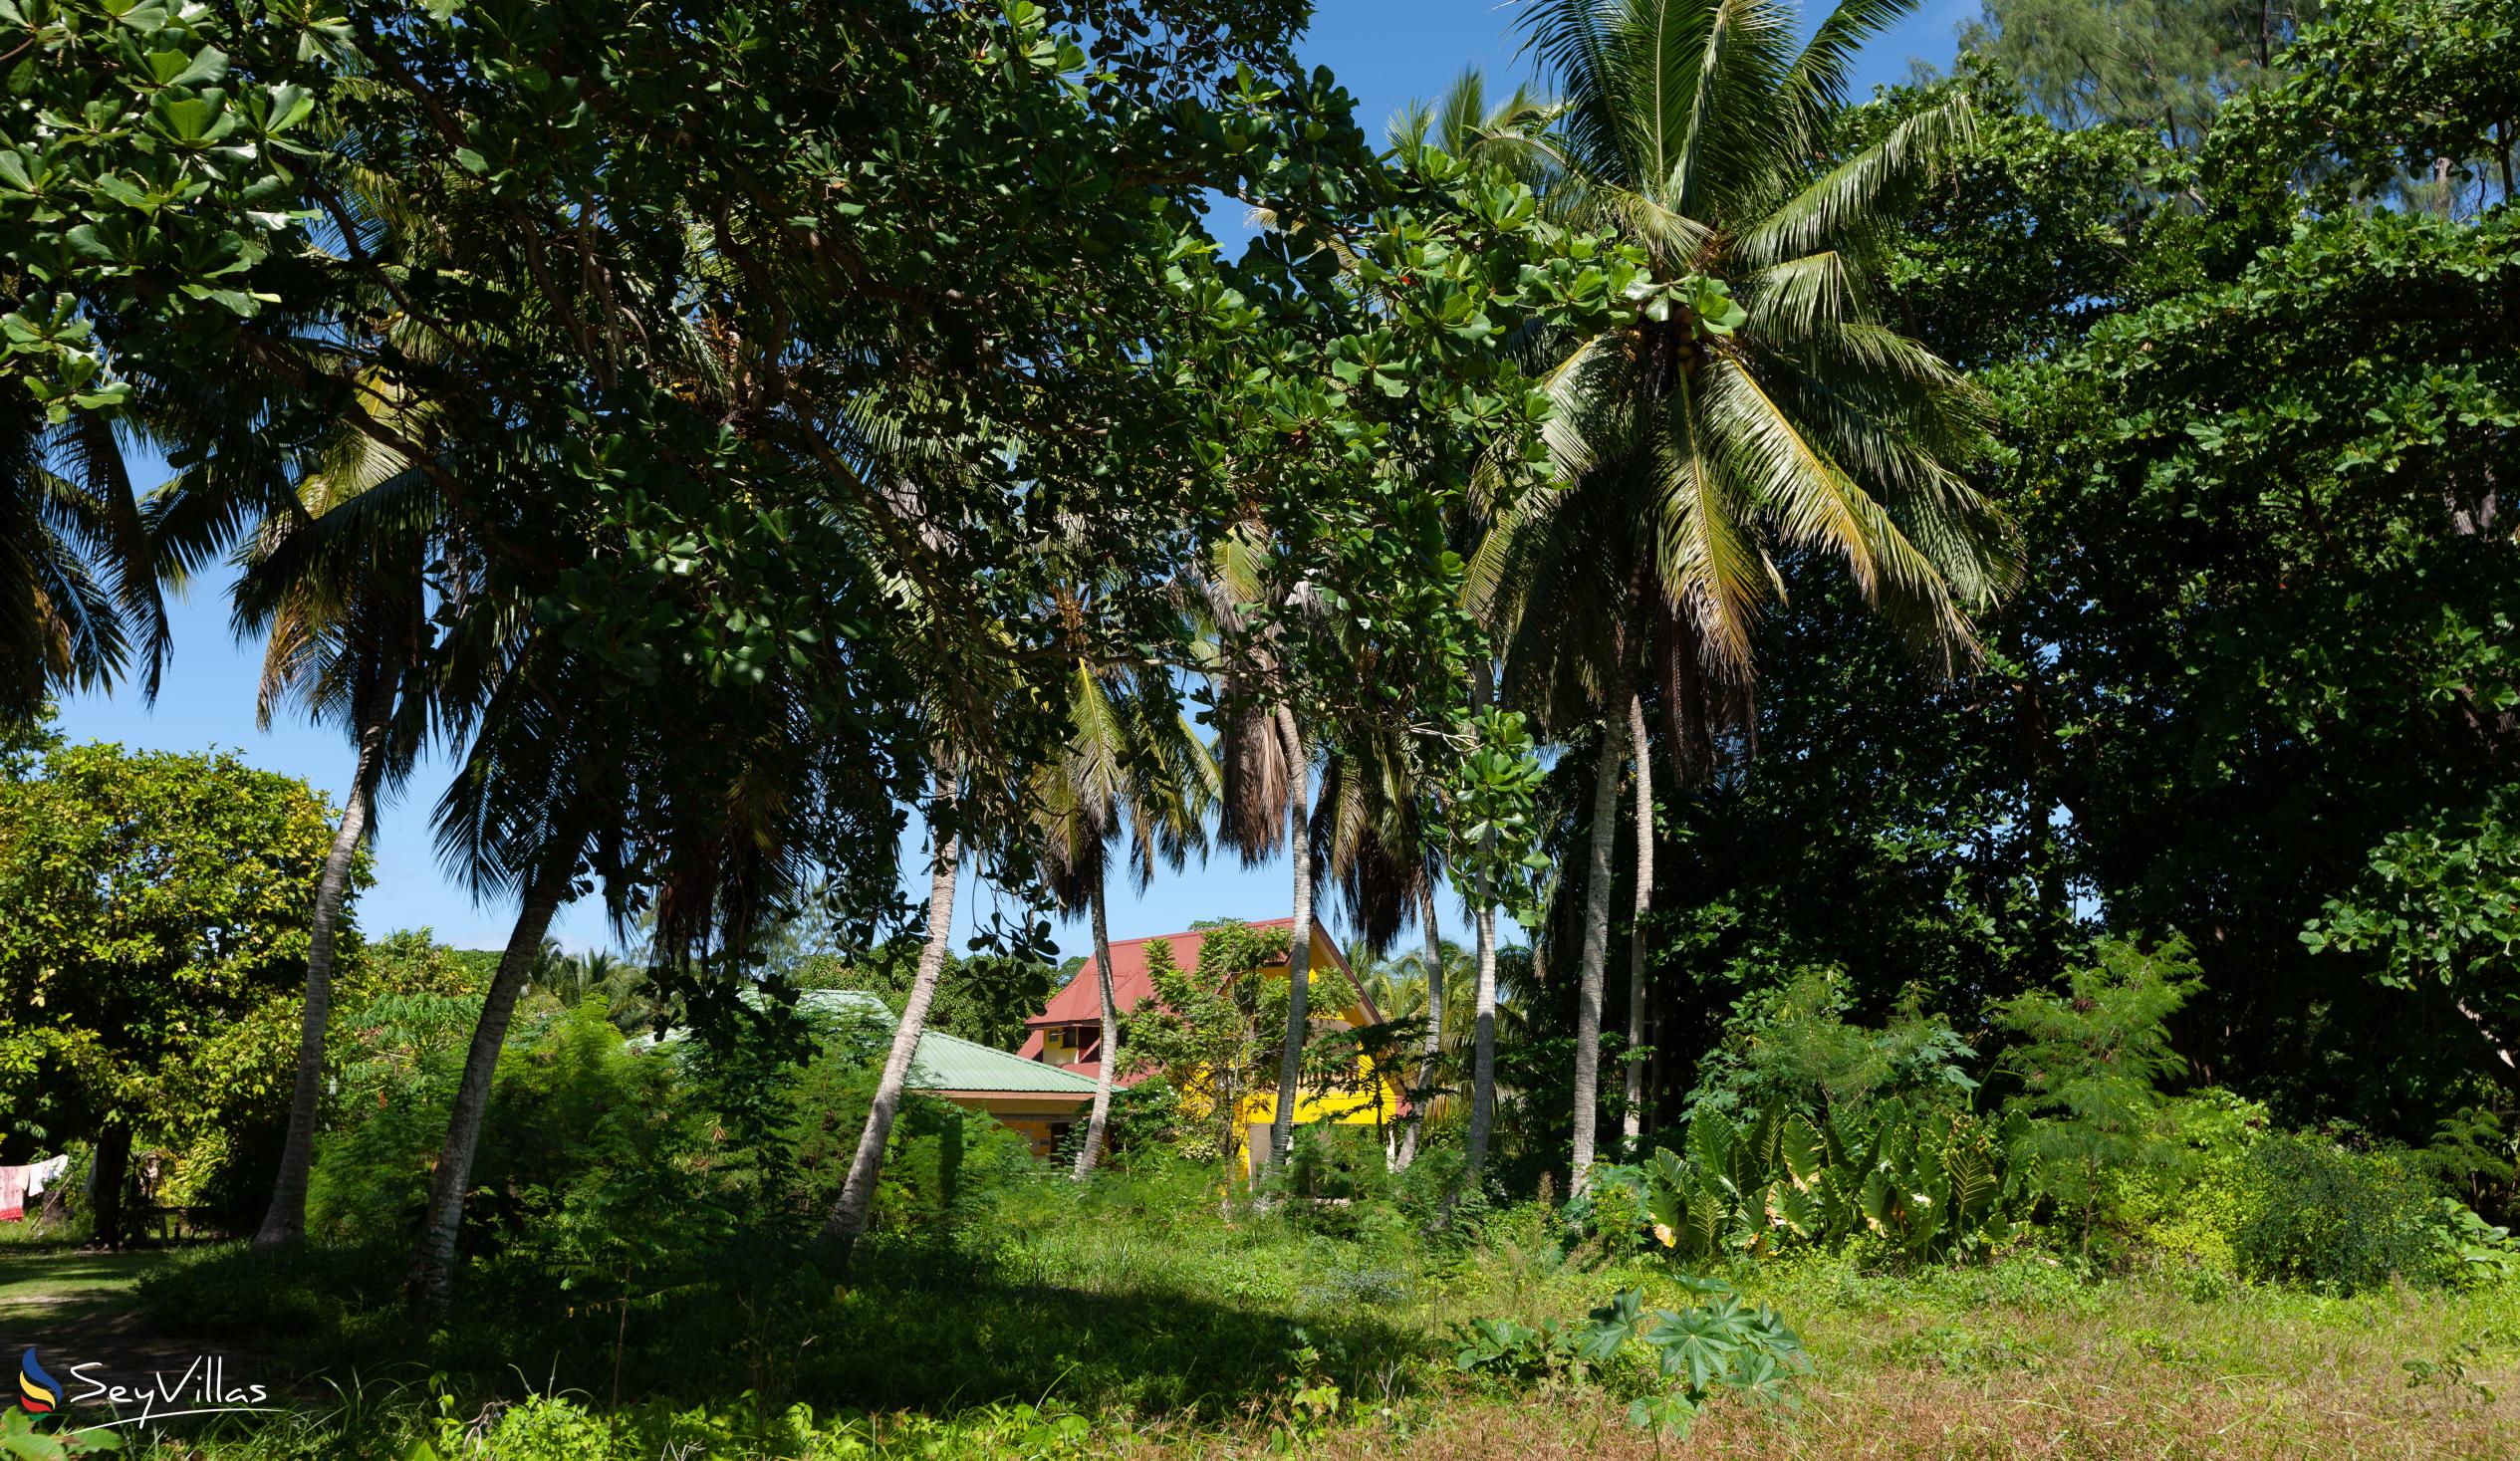 Foto 34: Coco de Mahi - Posizione - La Digue (Seychelles)